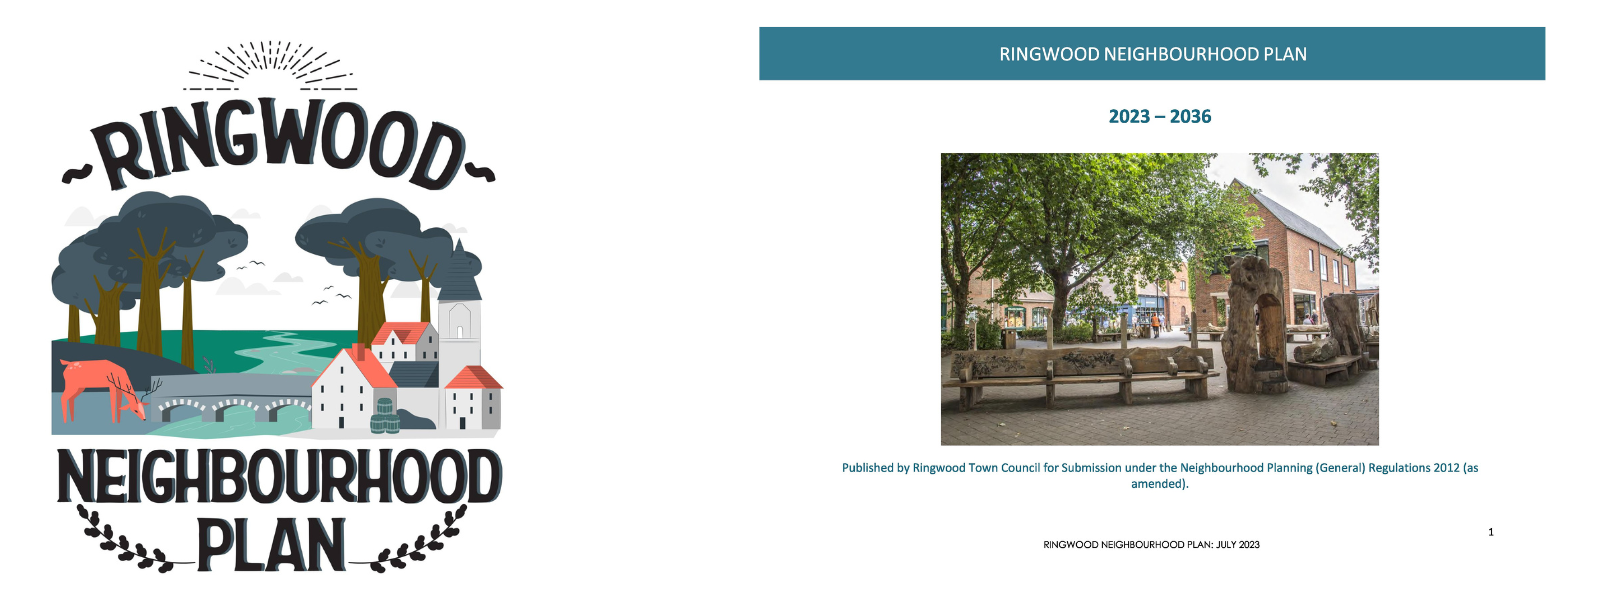 Update on Ringwood Neighbourhood Plan